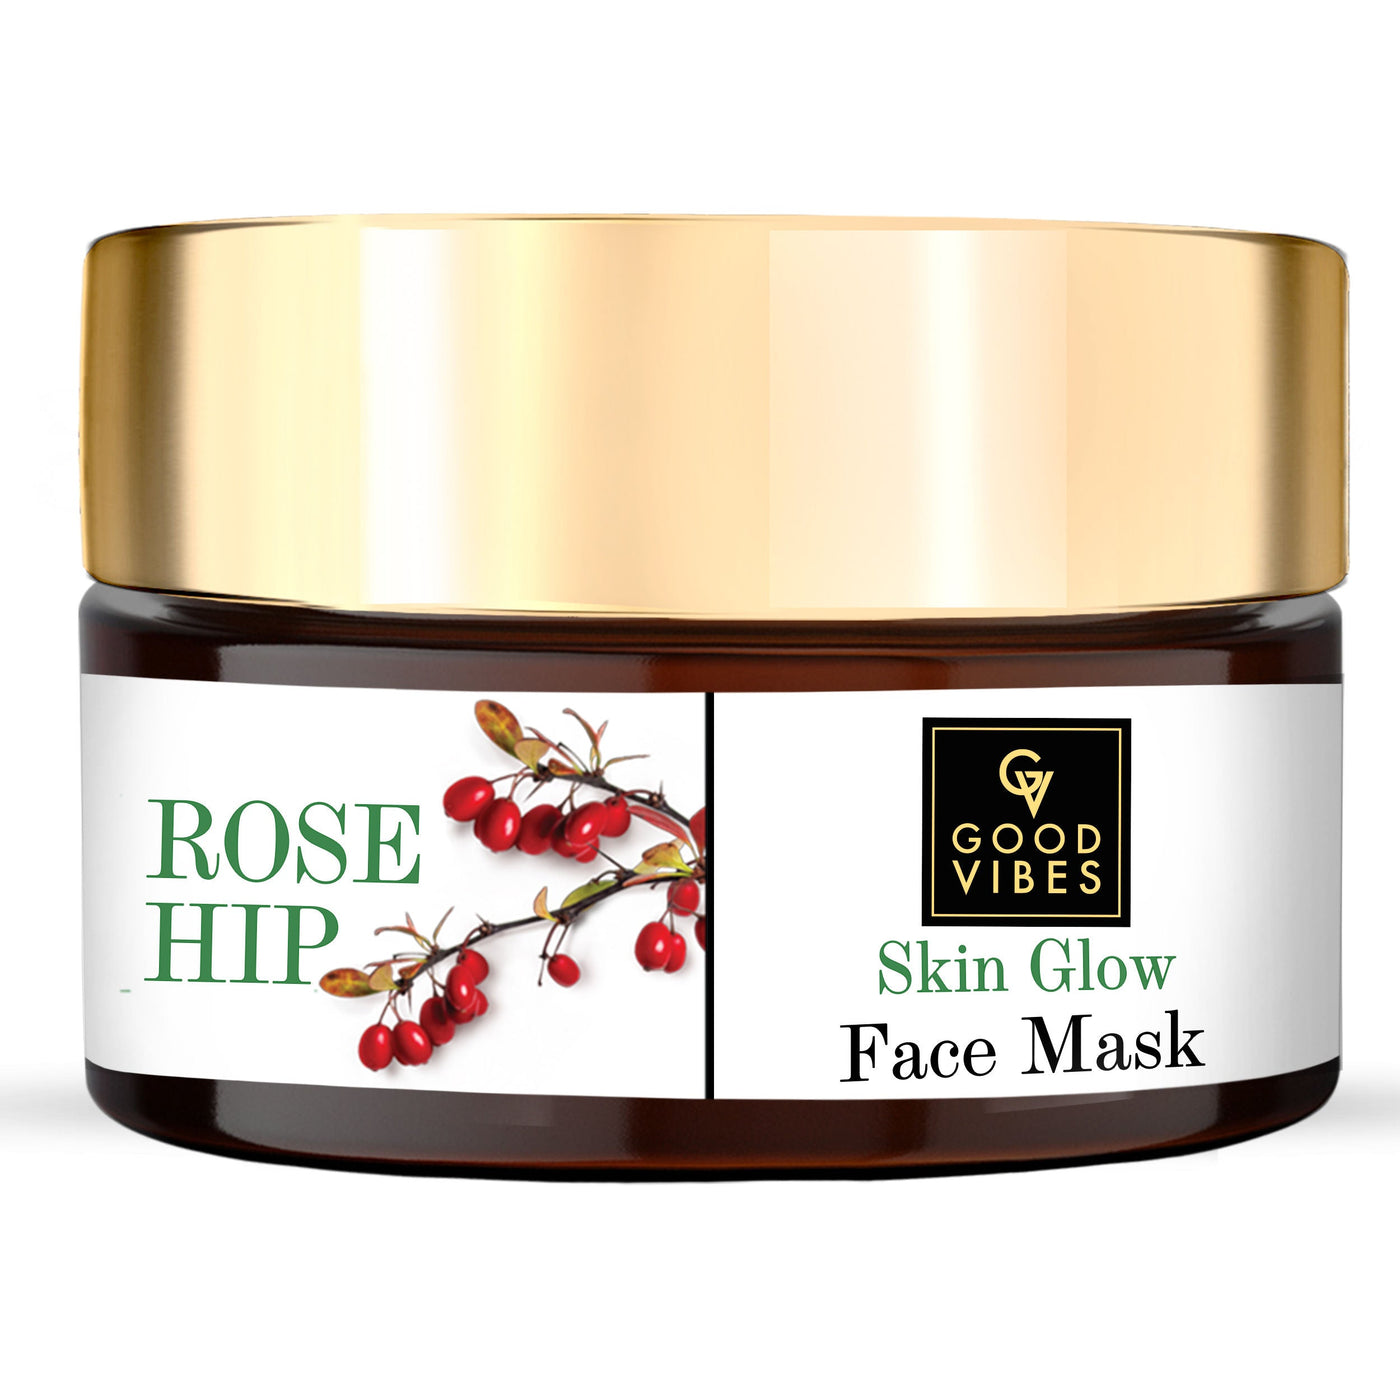 Good Vibes Skin Glow Face Mask - Rosehip (100 g) - 1